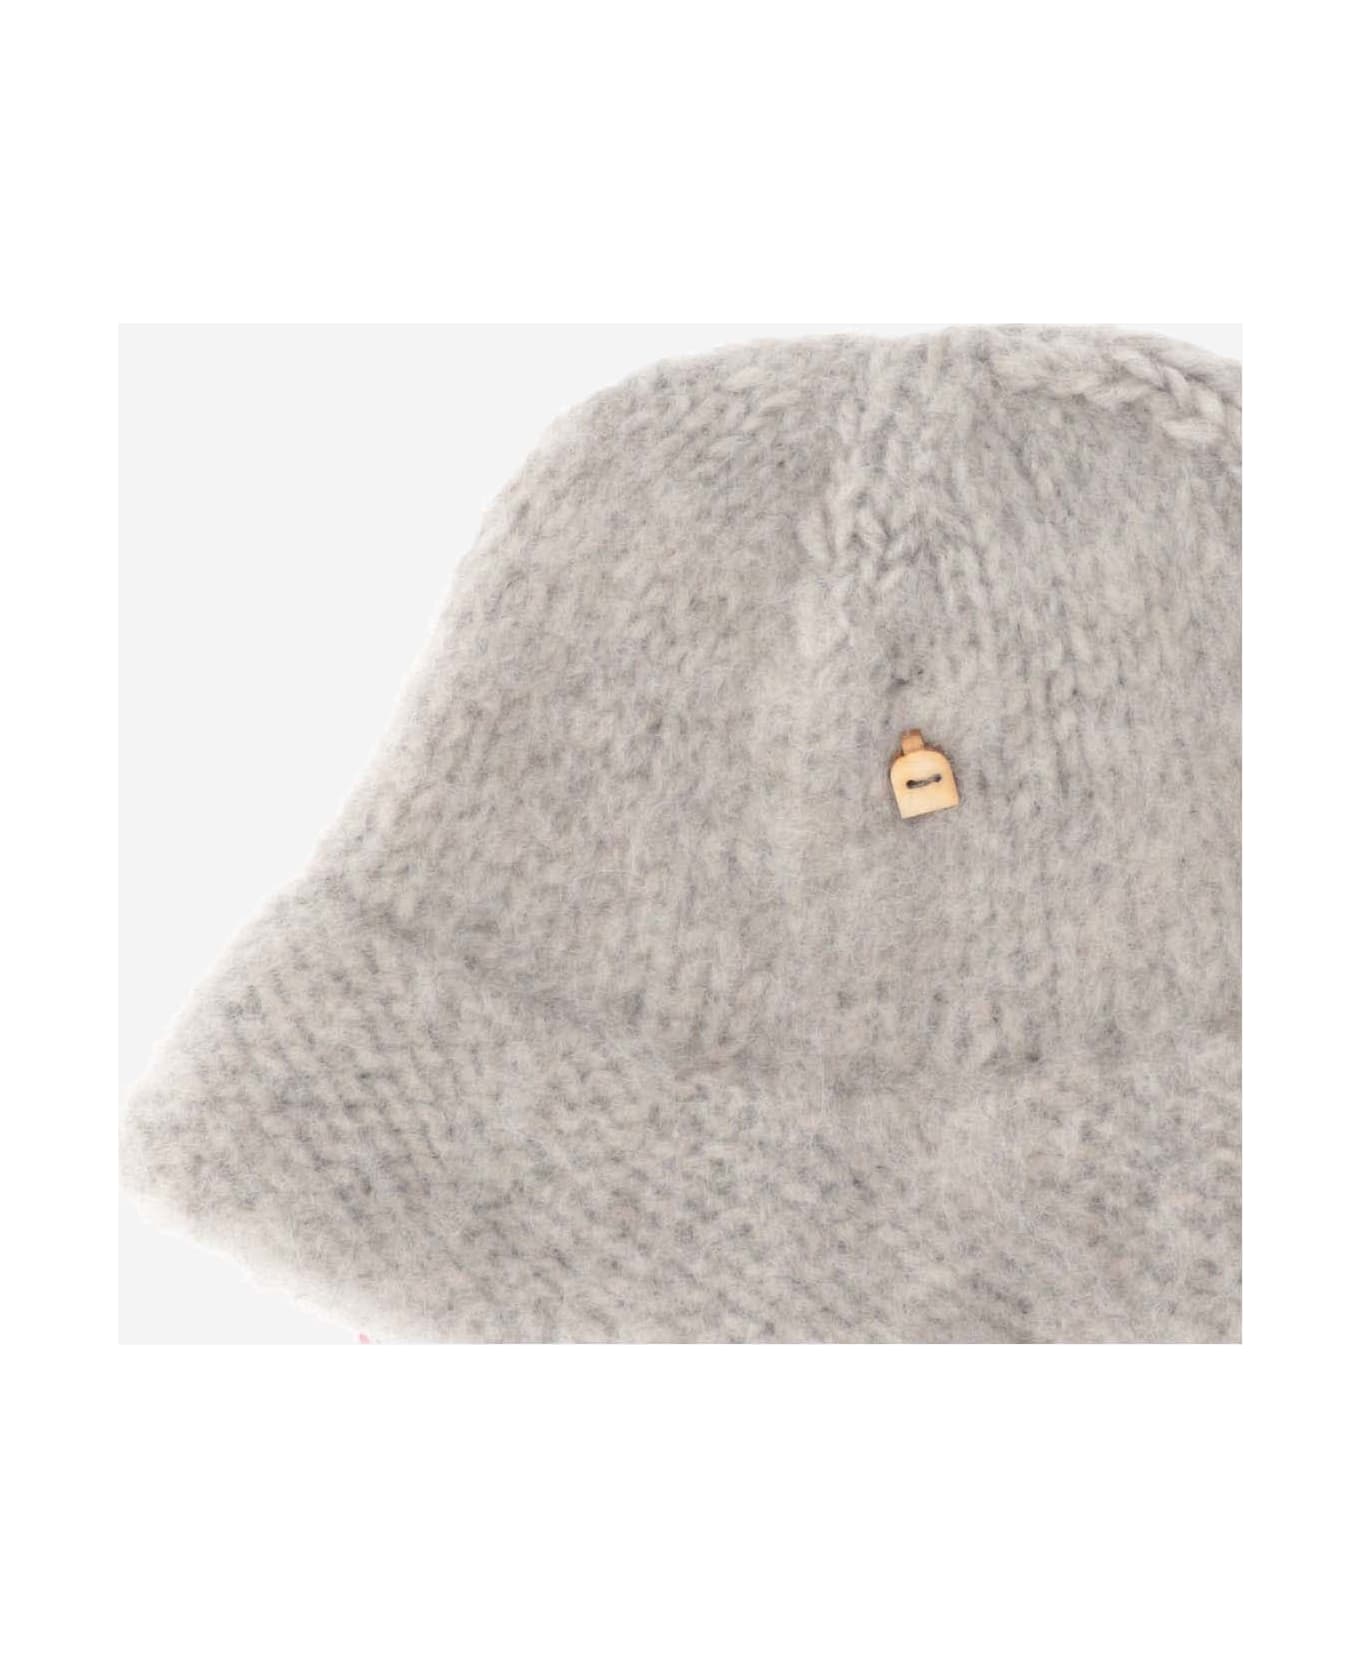 Myssy Wool Bucket Hat Beanie - Grey